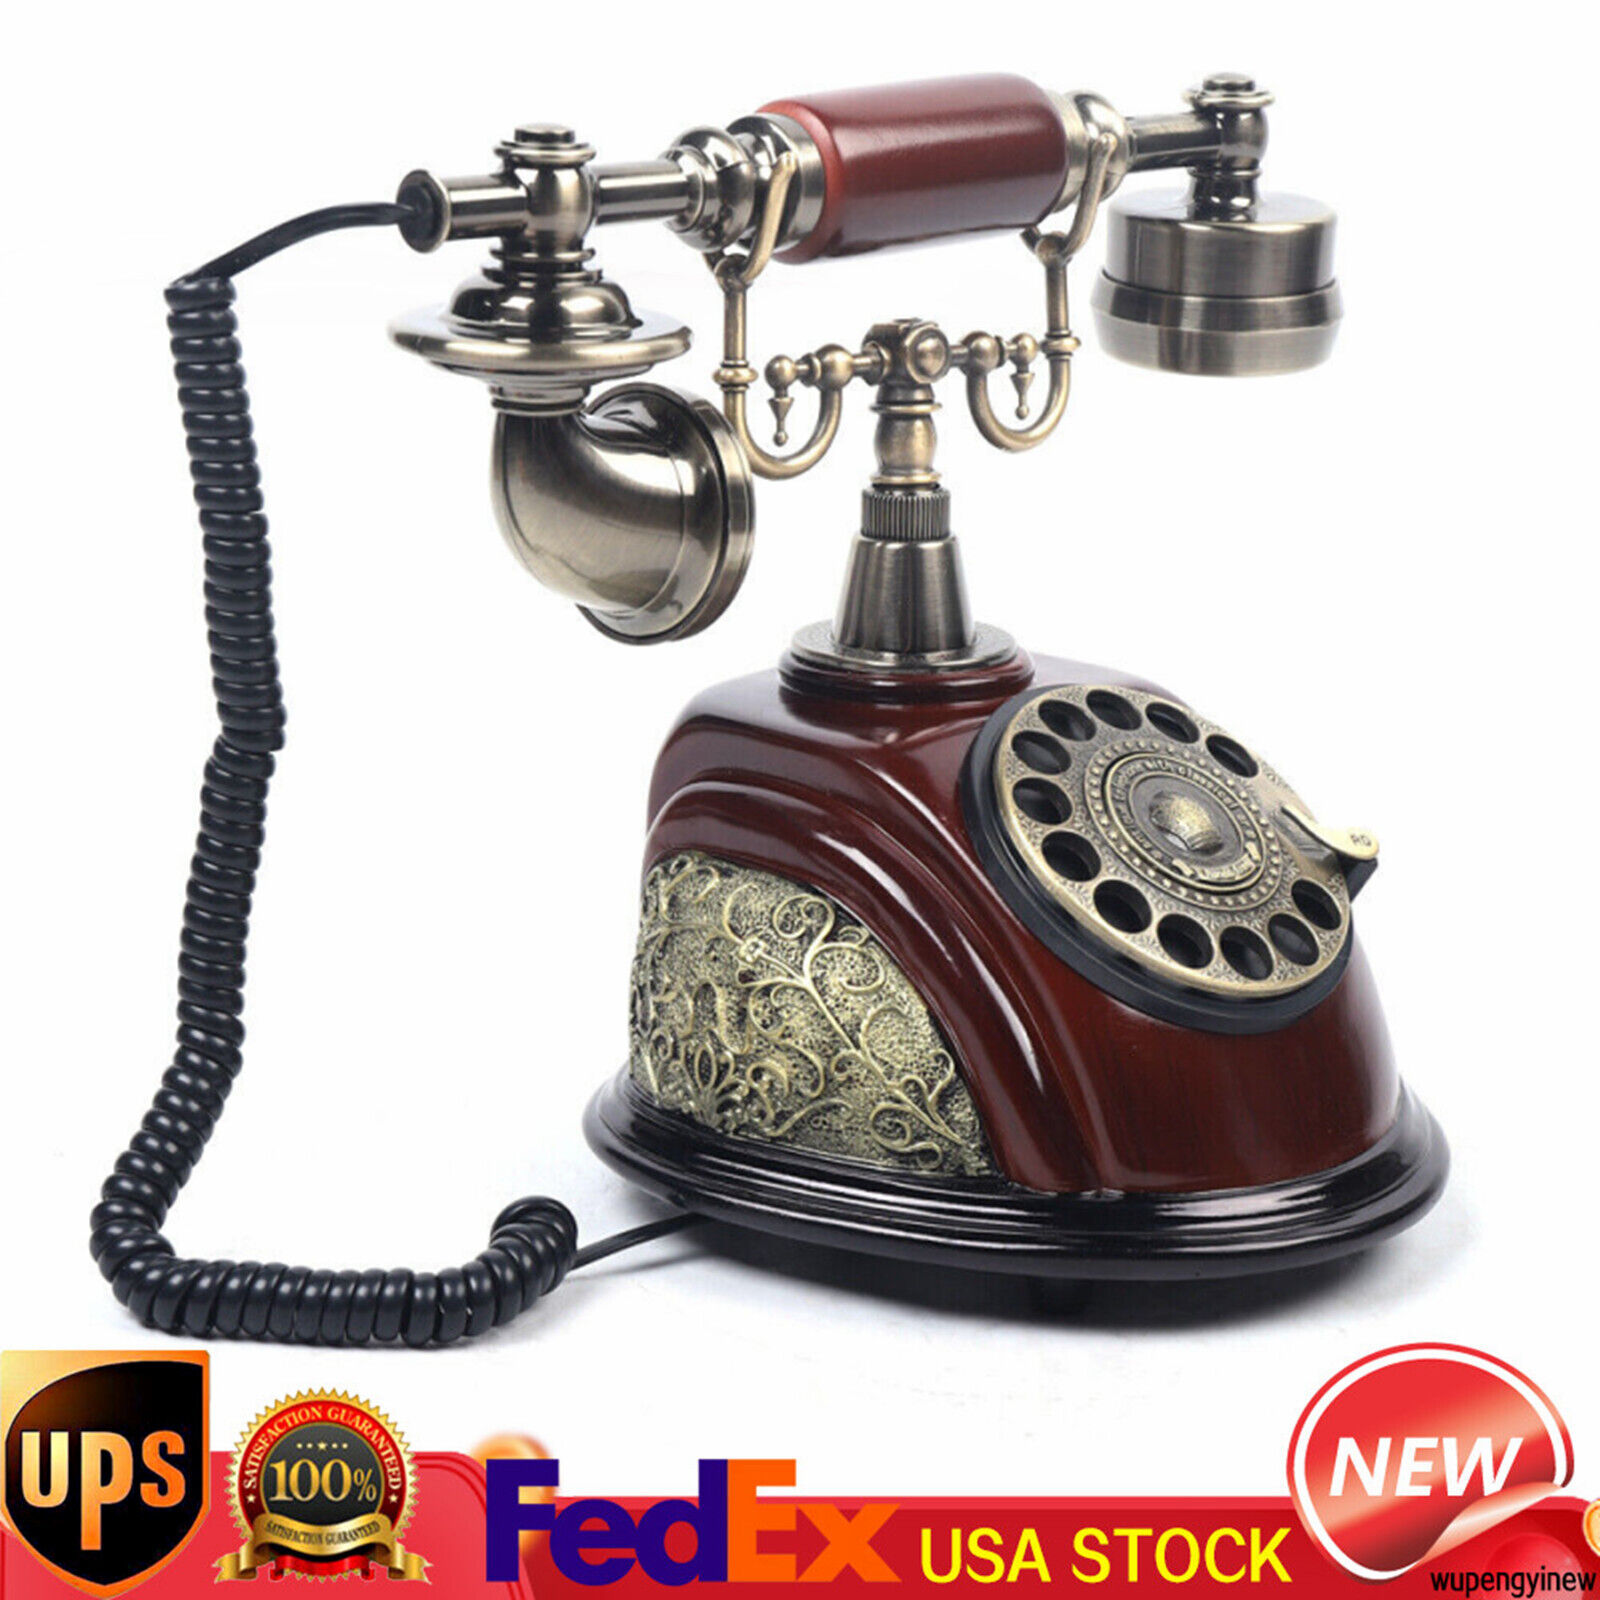 Vintage Antique Old Fashioned Rotary Dial Phone Handset Telephone Handset Desk 